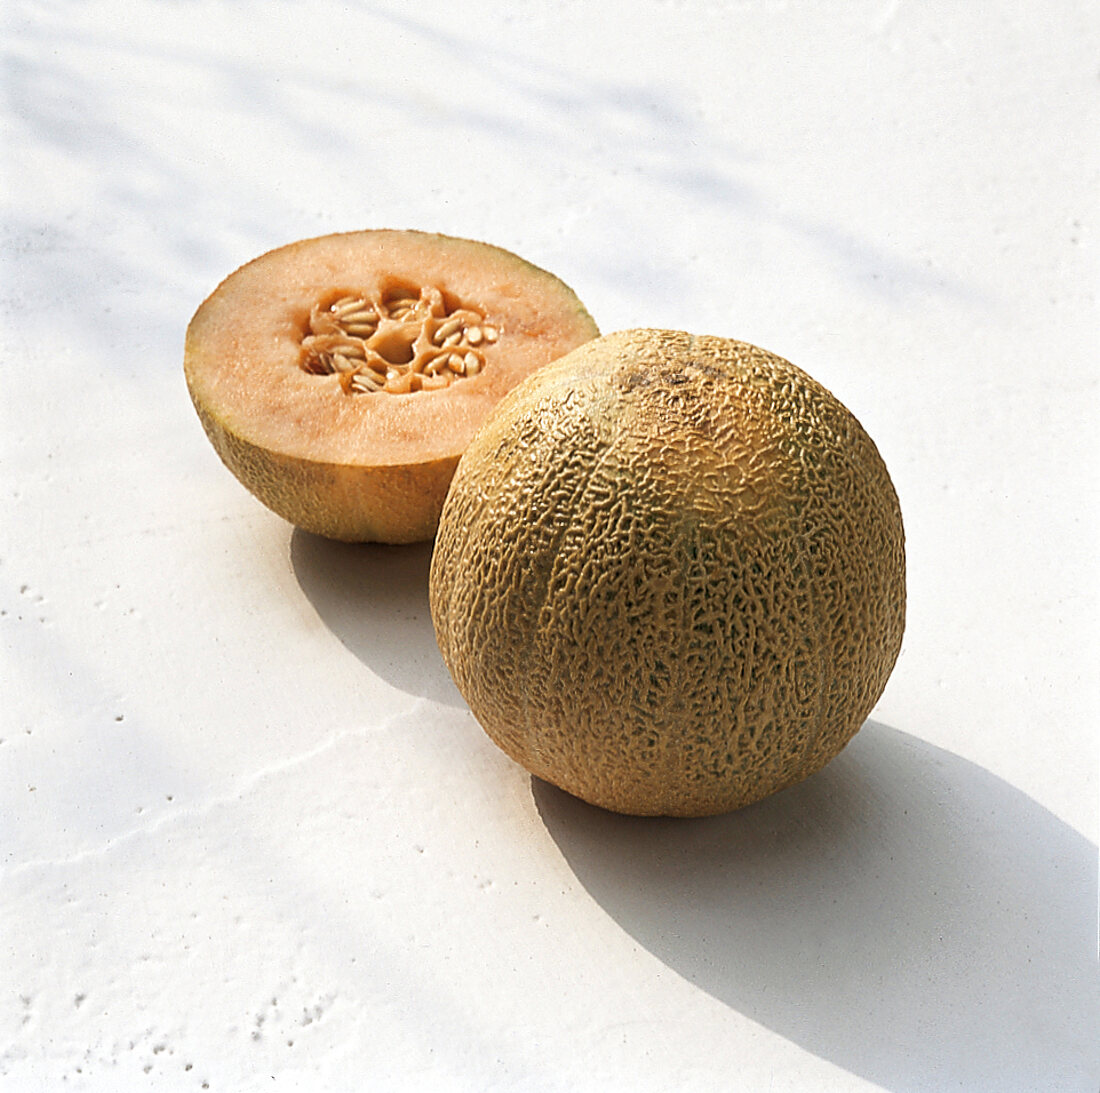 Whole and half ripe cantaloupe melon on white surface